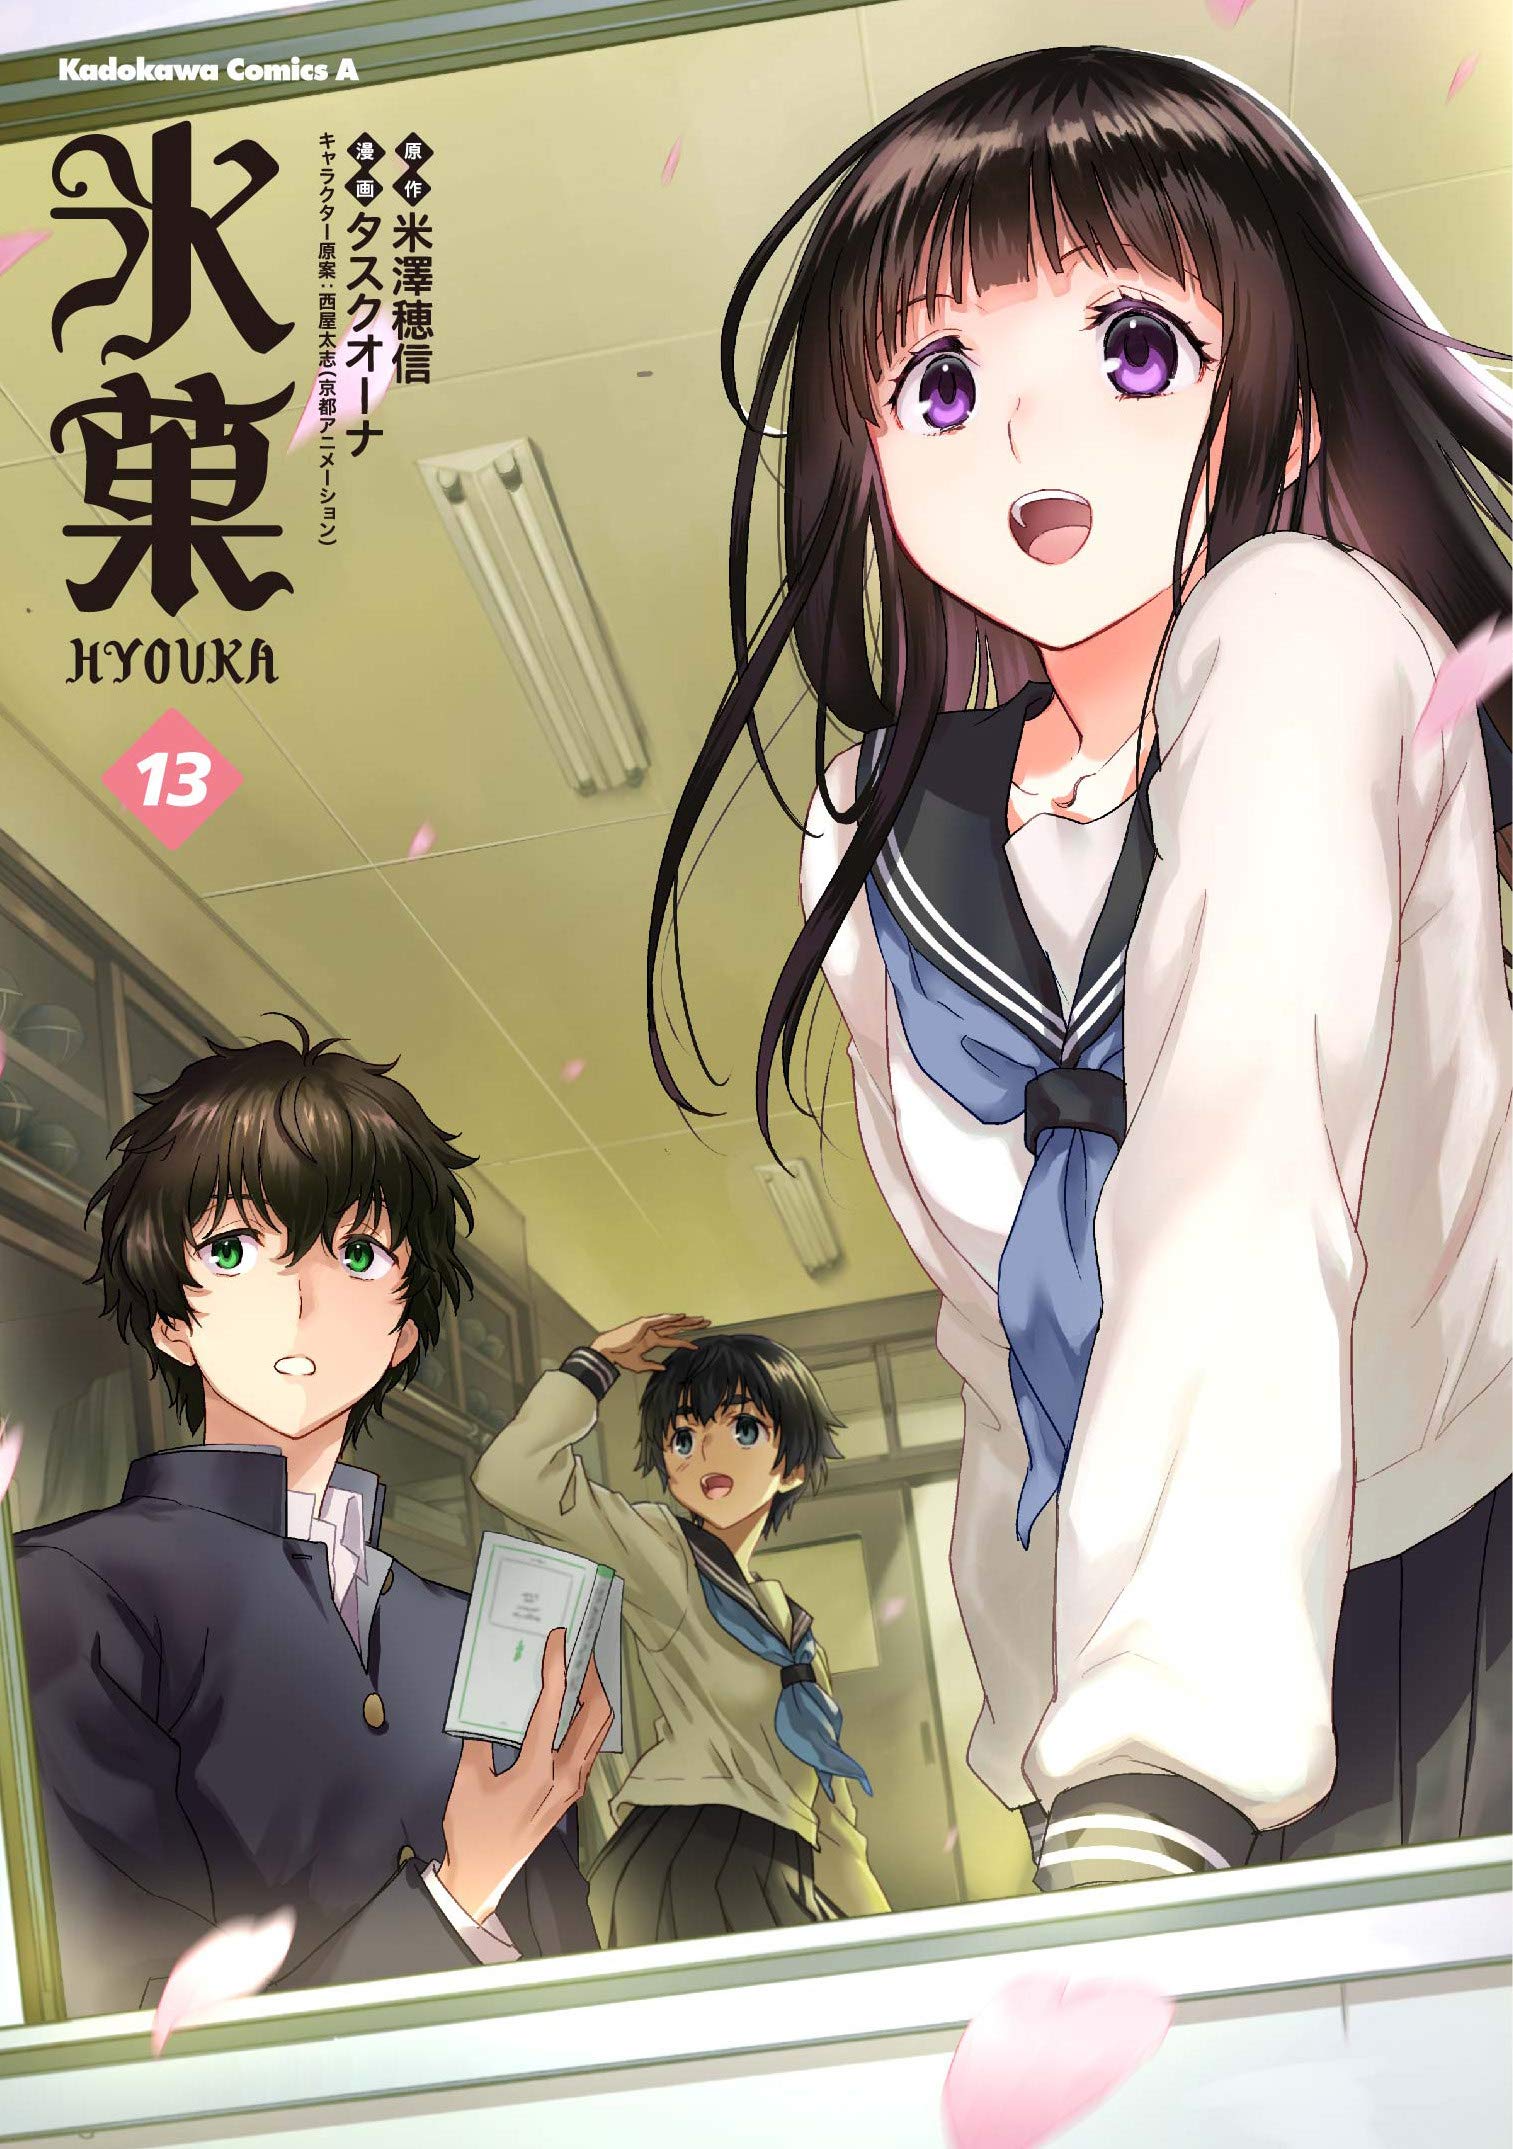 Hyouka Manga Reveals Cover for Volume 13 〜 Anime Sweet ����